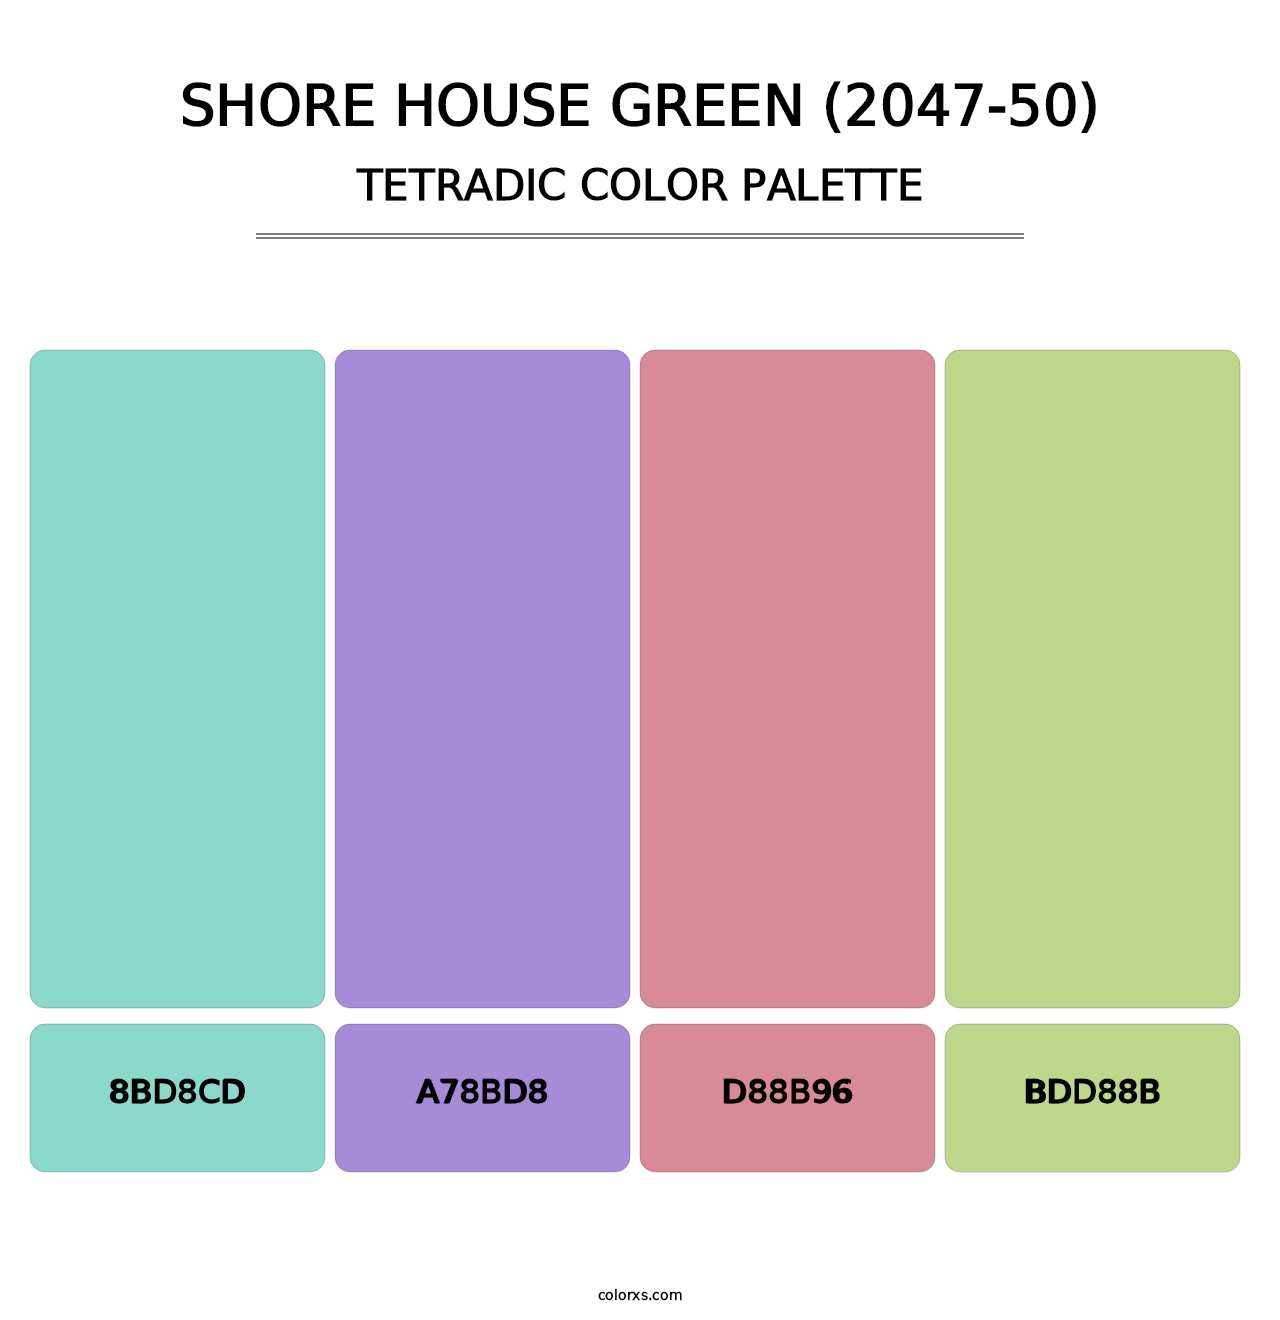 Shore House Green (2047-50) - Tetradic Color Palette